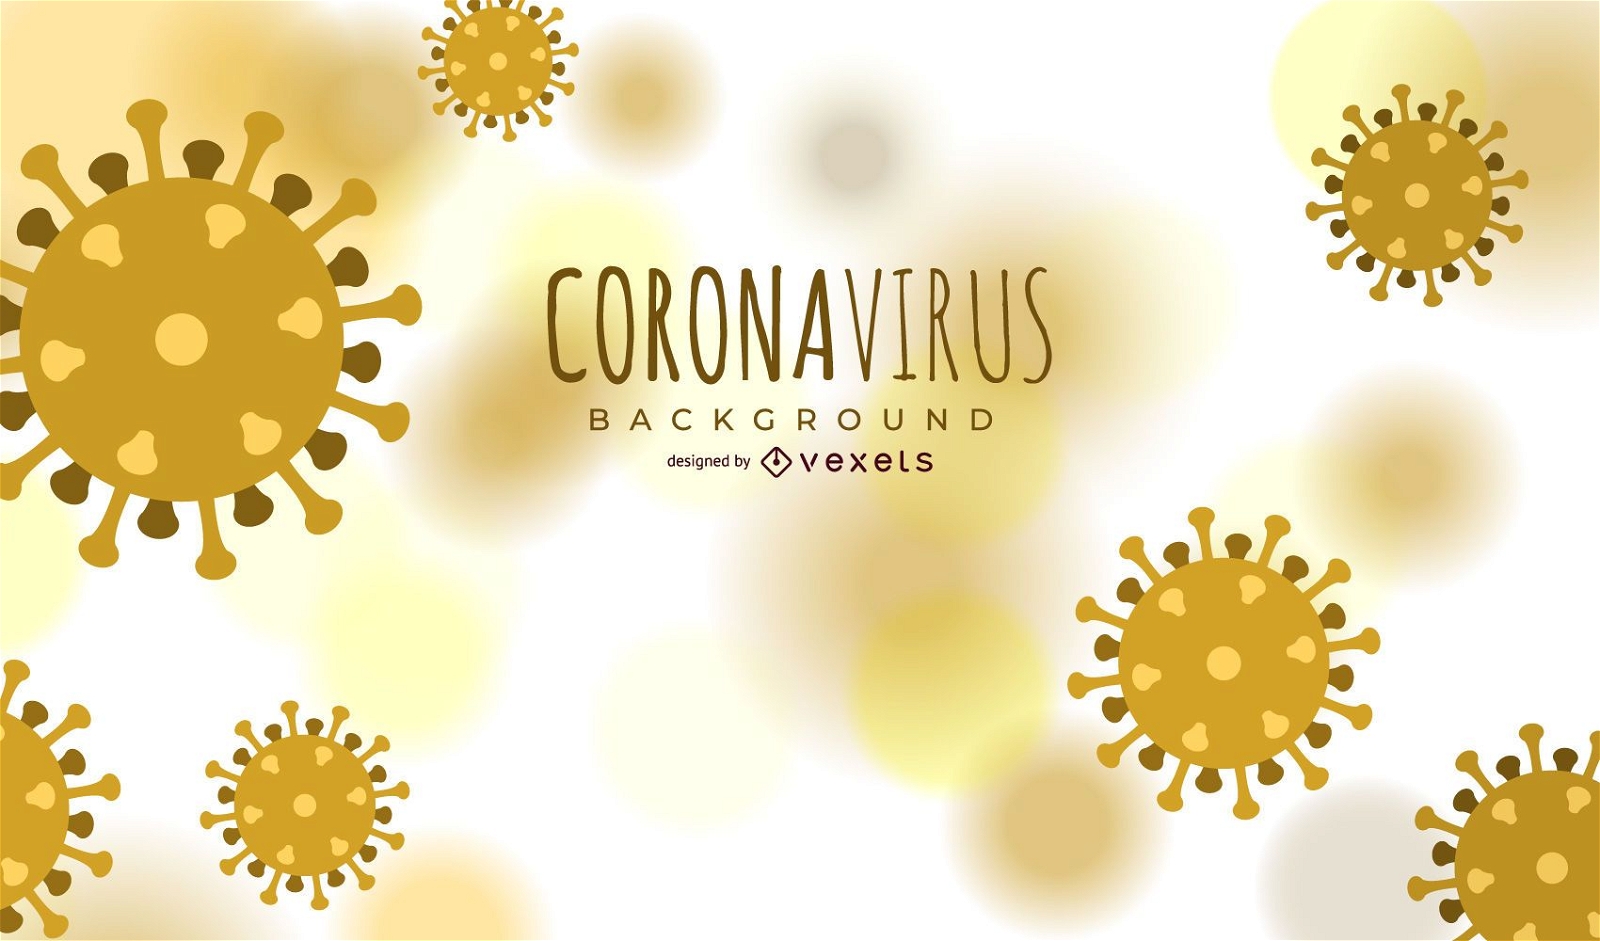 Coronavirus cell backround design